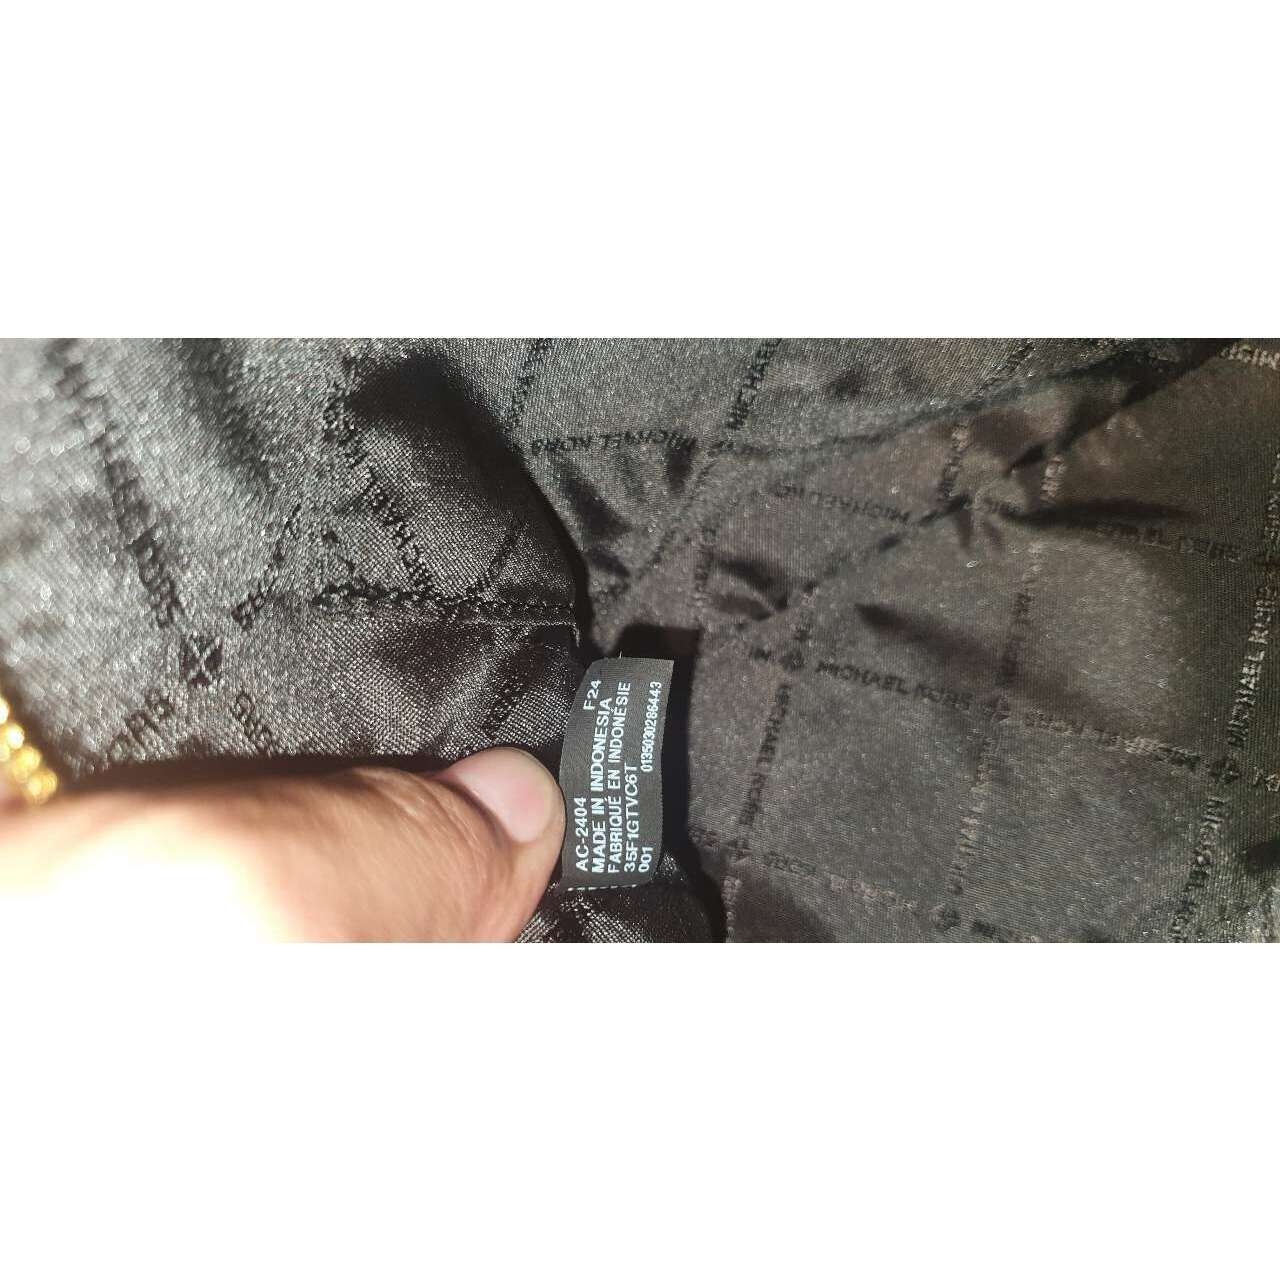 Michael Kors Dome Medium Black Shoulder Bag